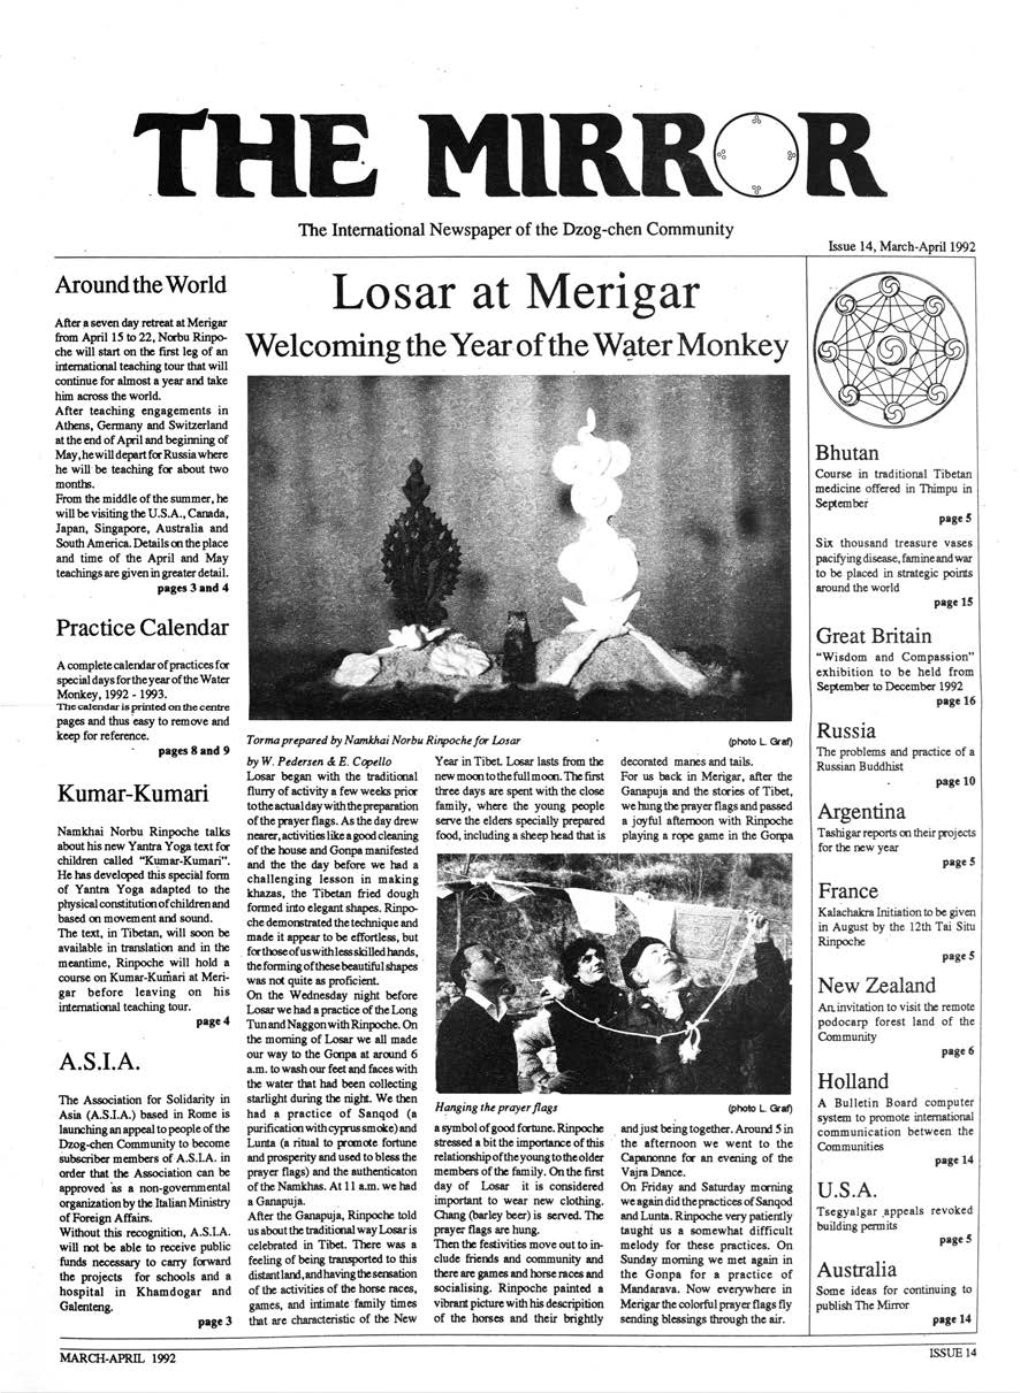 The Mirror 14 March-April 1992